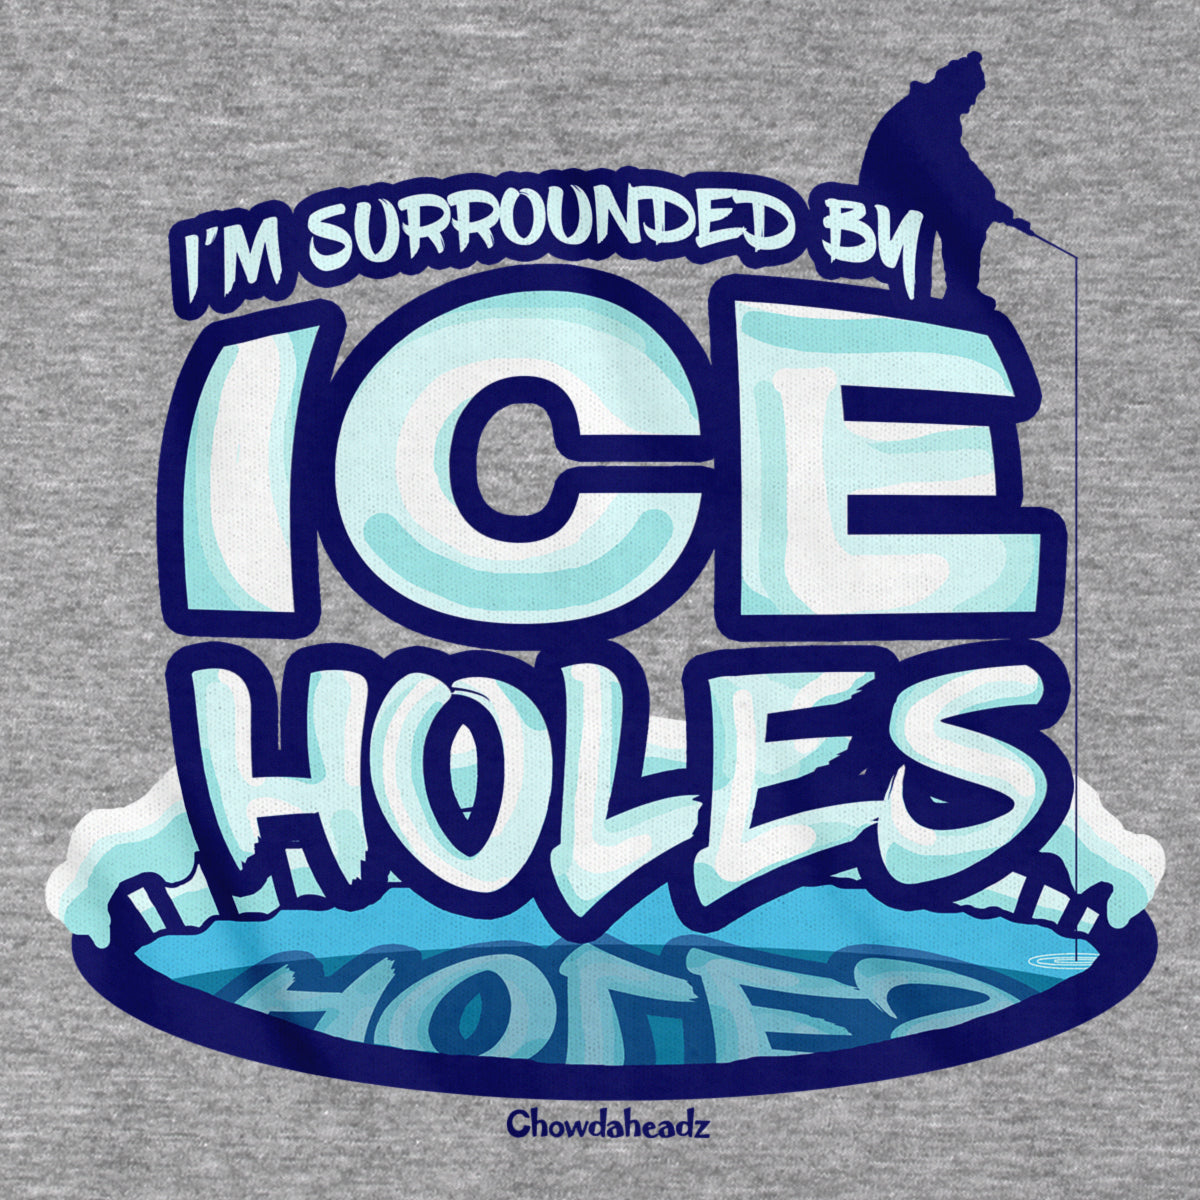 I'm Surrounded By Ice Holes T-Shirt - Chowdaheadz